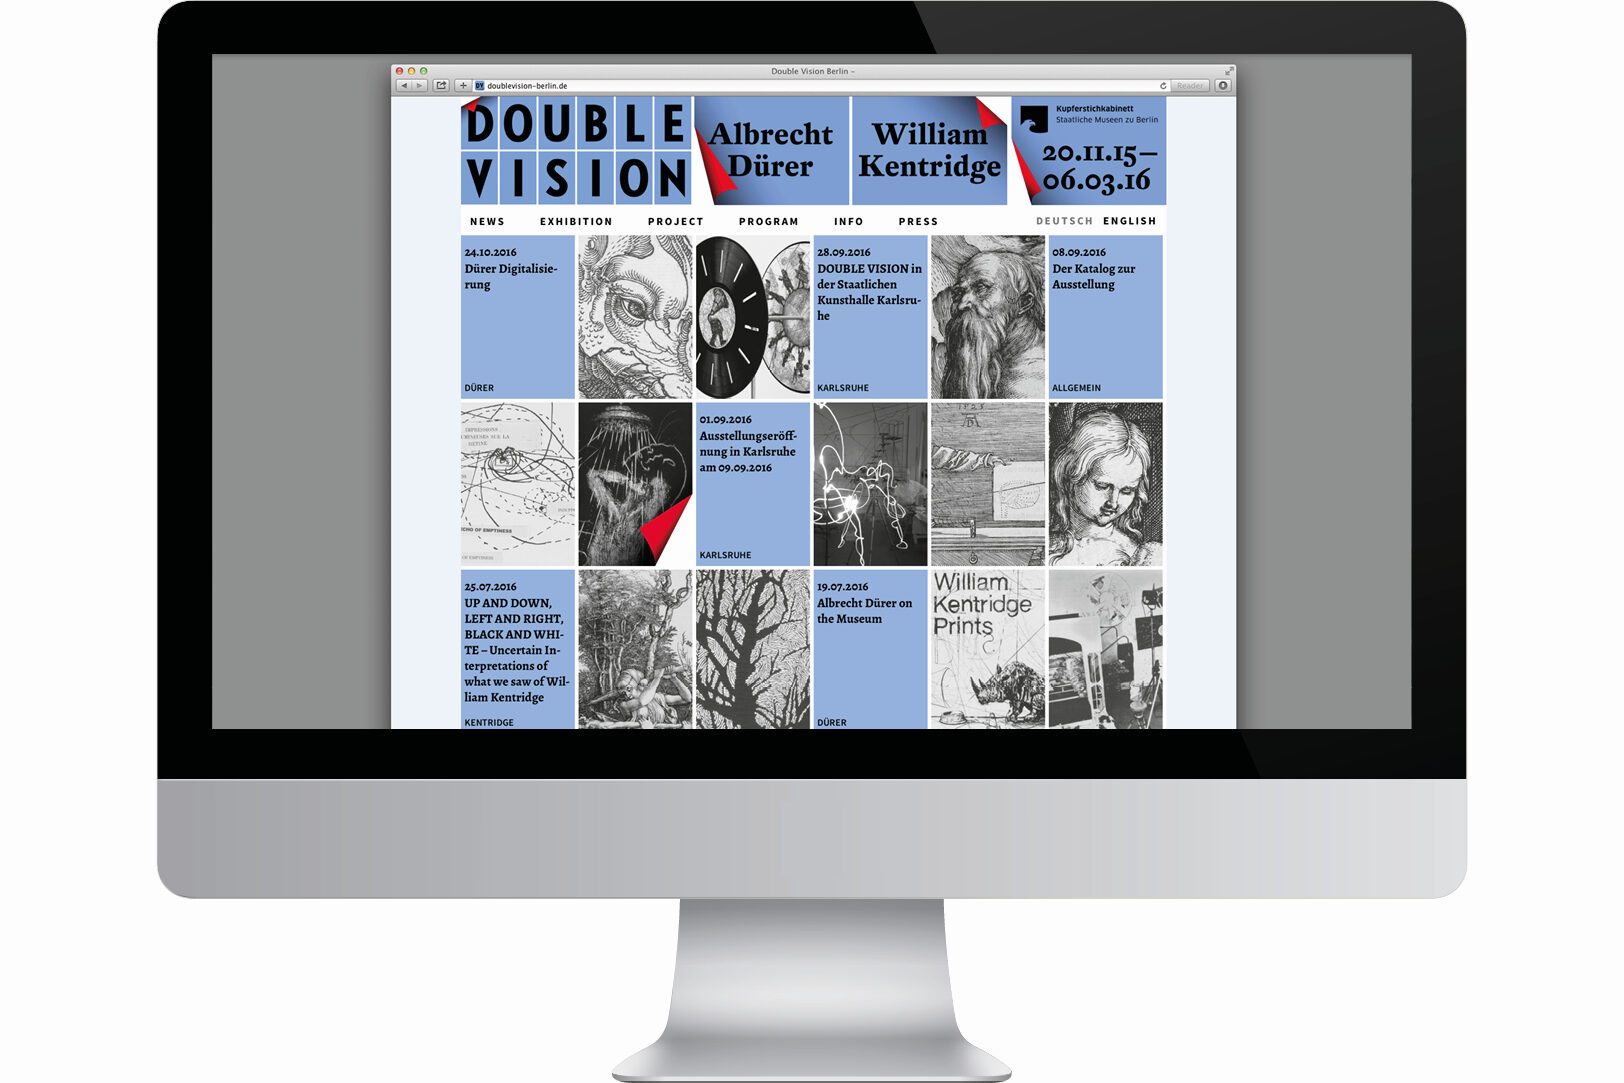 http://e-o-t.de/wordpress/wp-content/uploads/2015/11/Eot-Double-Vision-Web-2.jpg